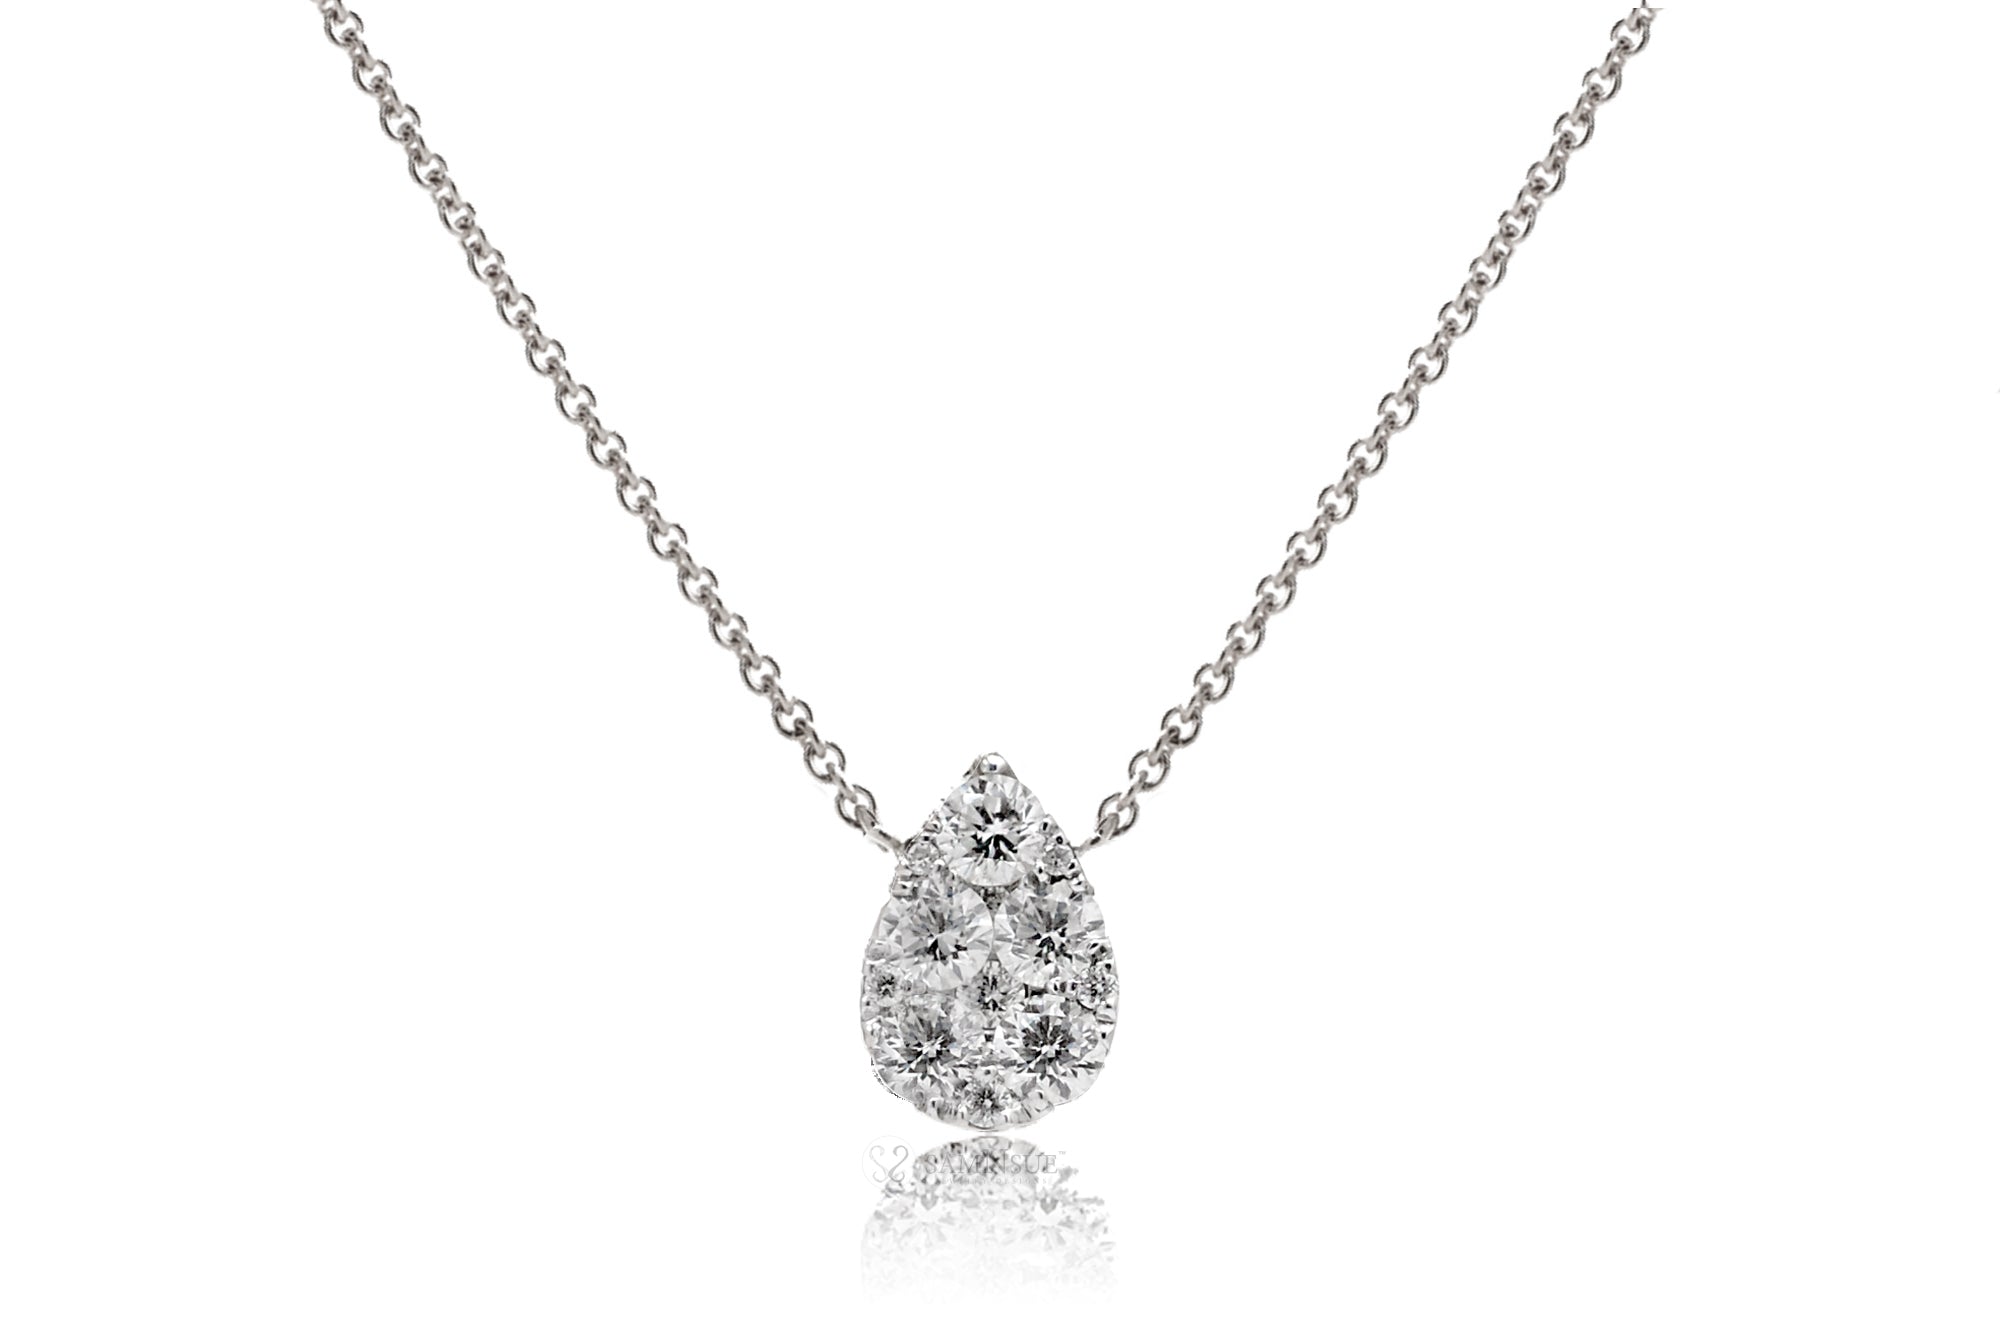 Pear shape cluster diamond pendant - solitaire tear drop diamond necklace in white gold